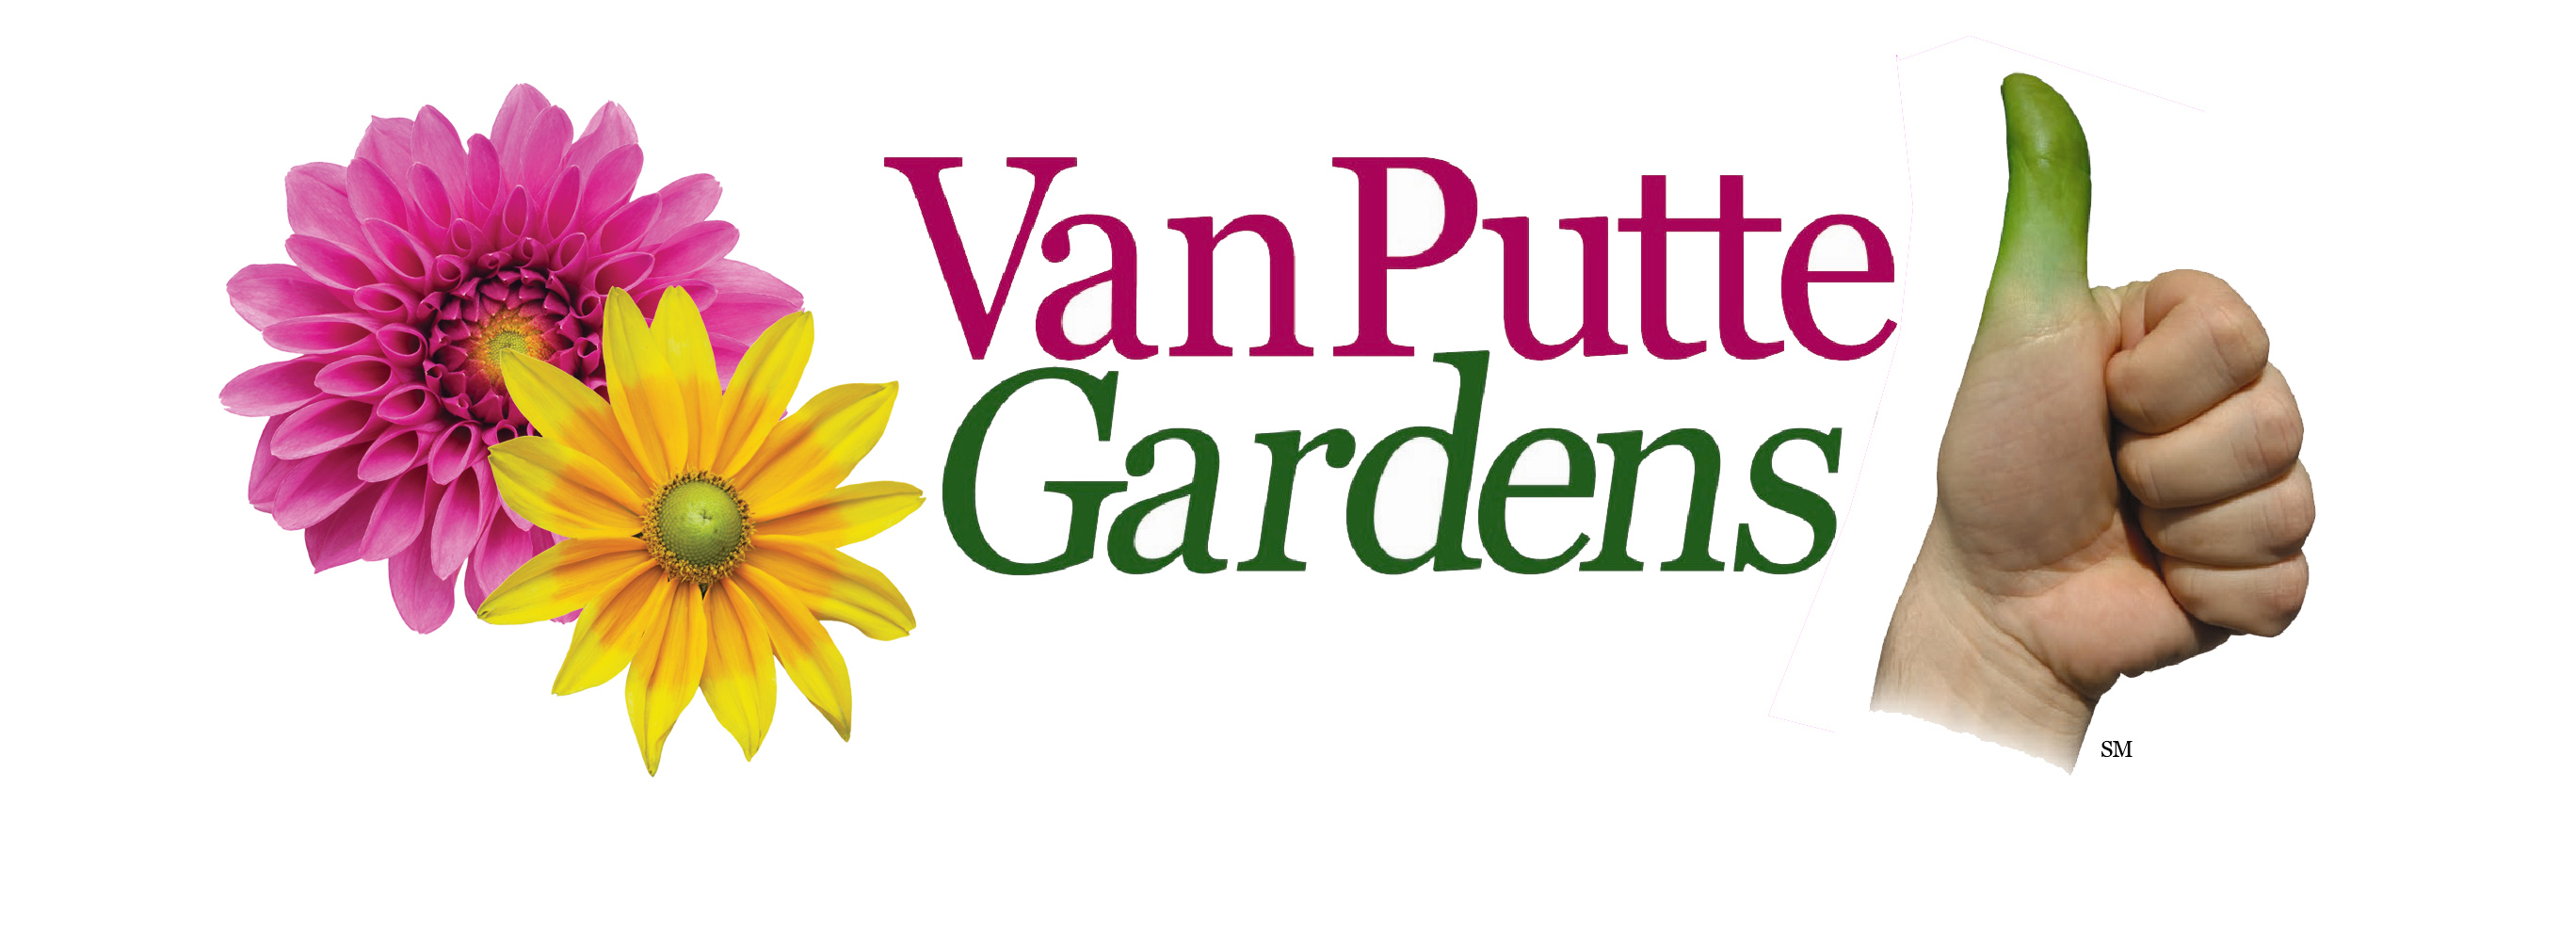 Van Putte Gardens Garden Center Landscape Rochester Ny